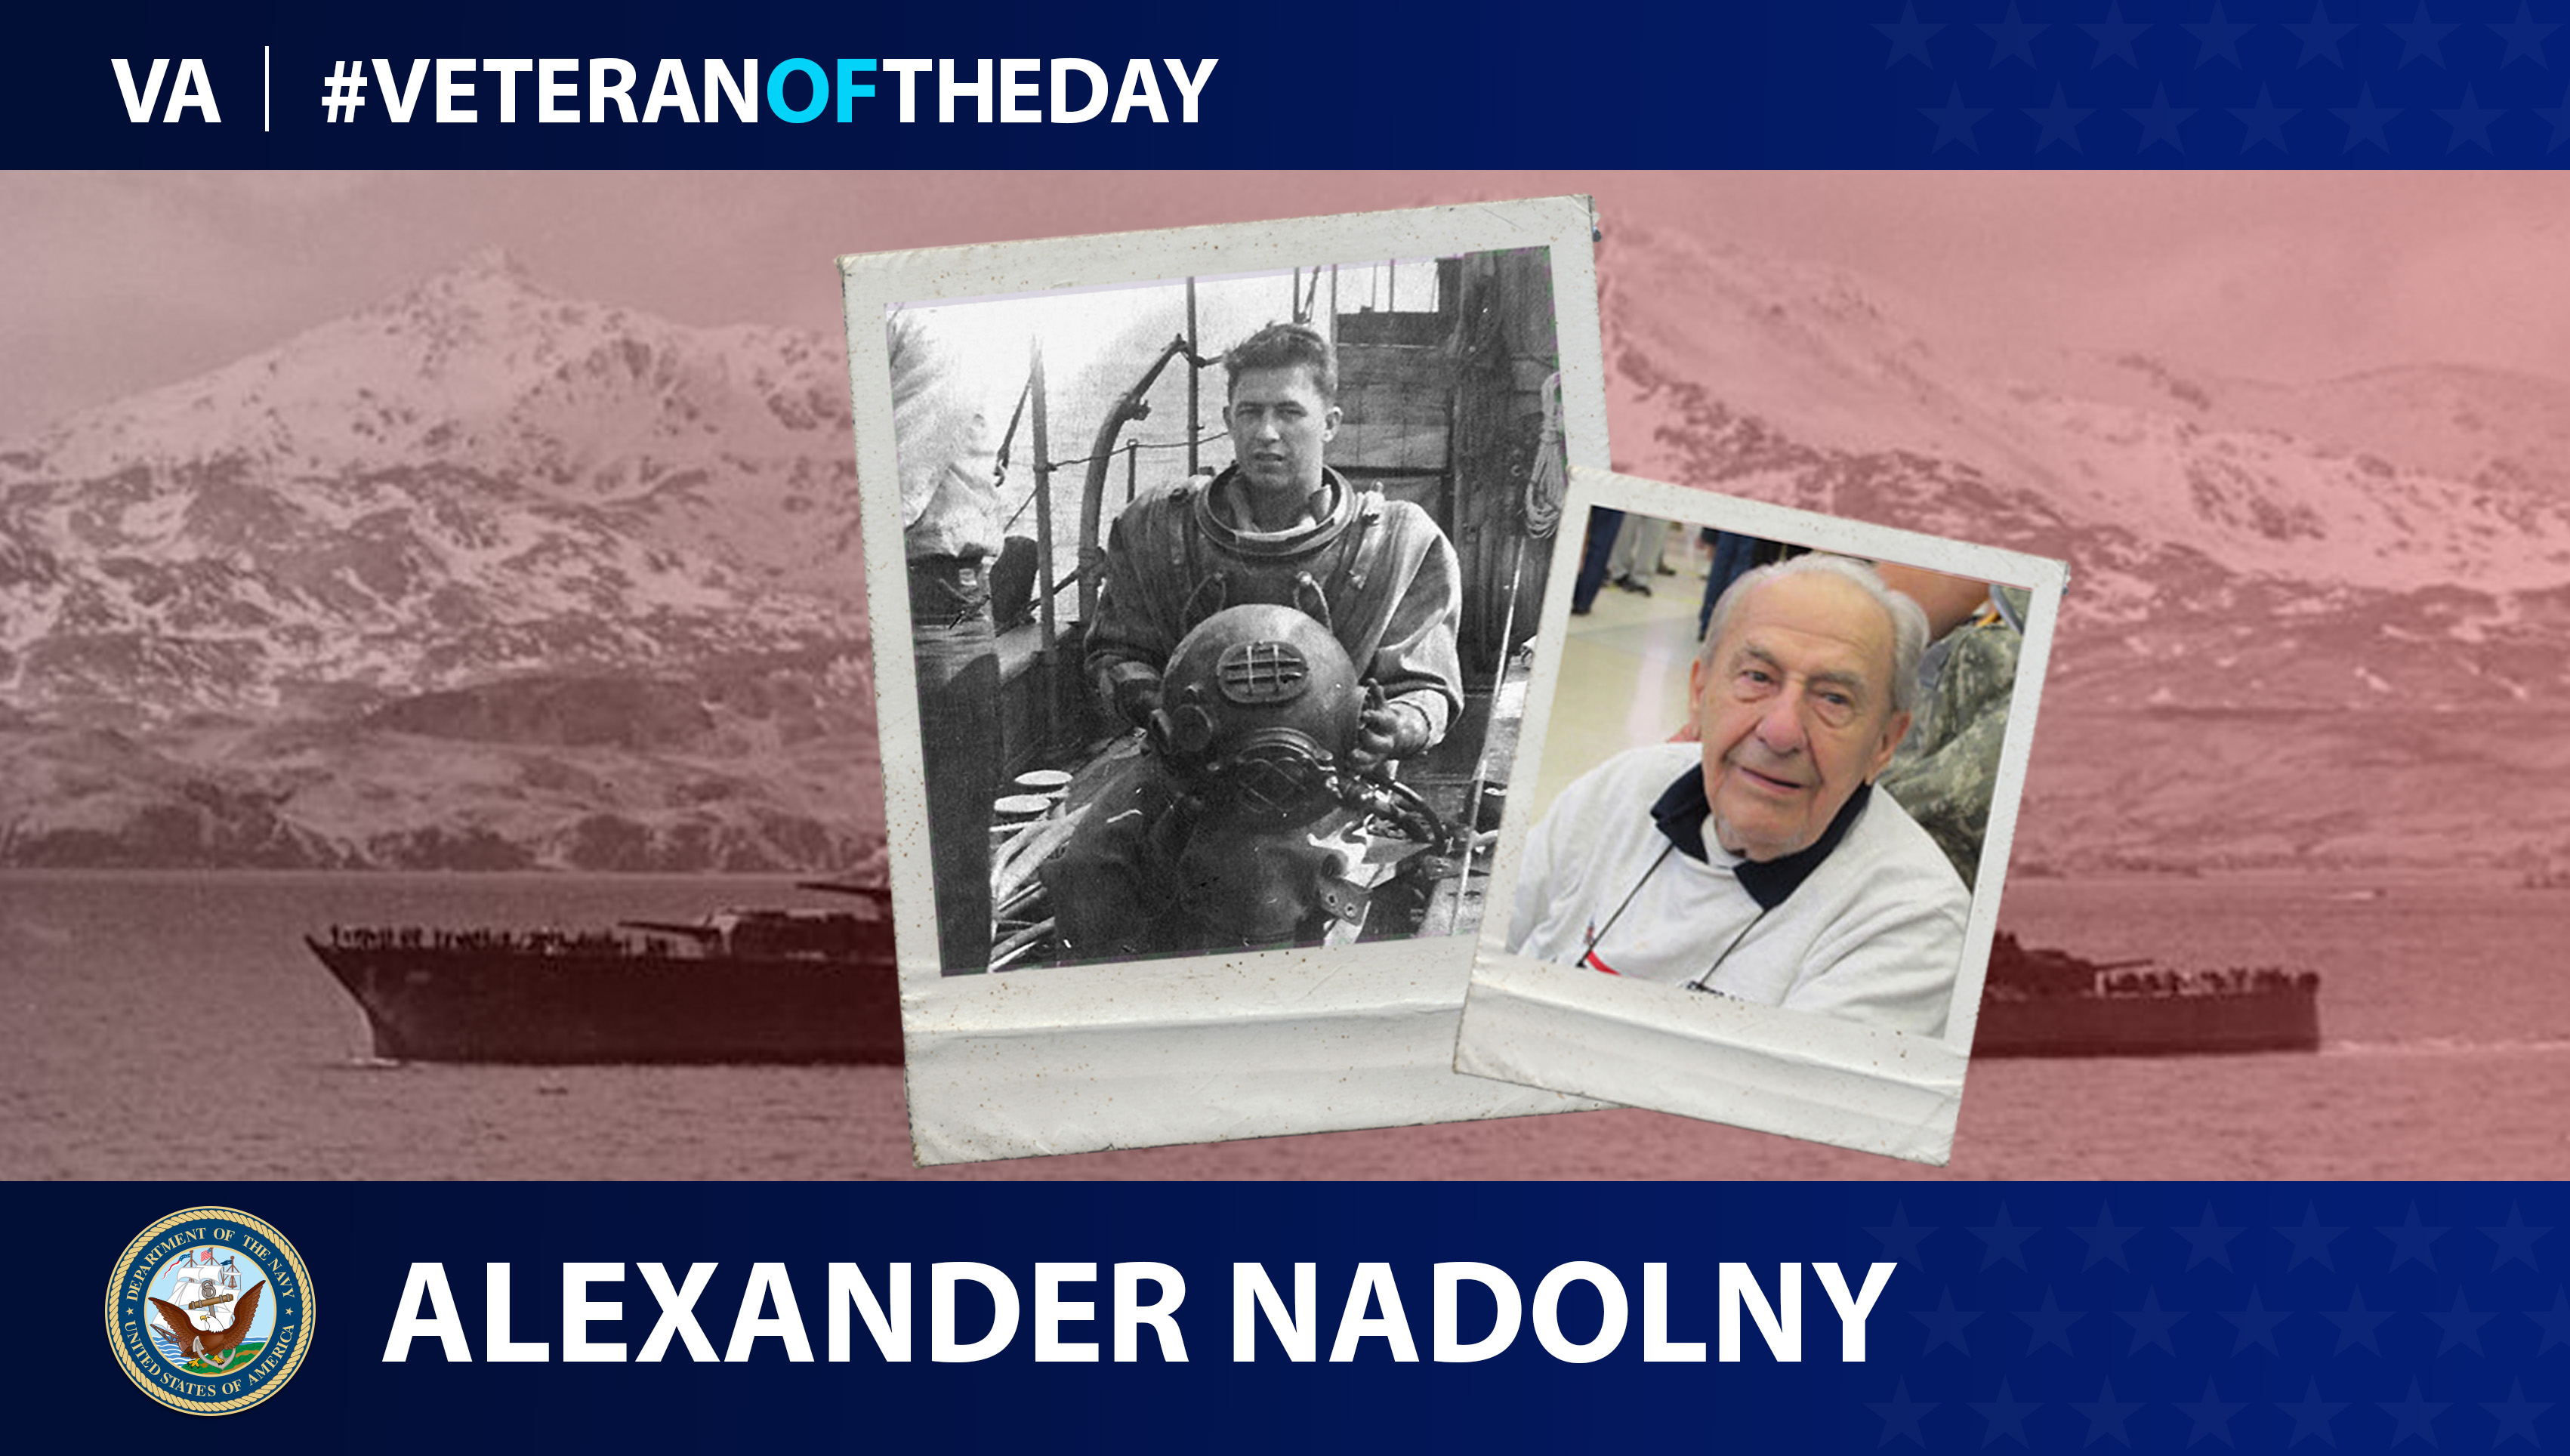 Navy Veteran Alexander Nadolny is today's Veteran of the day.